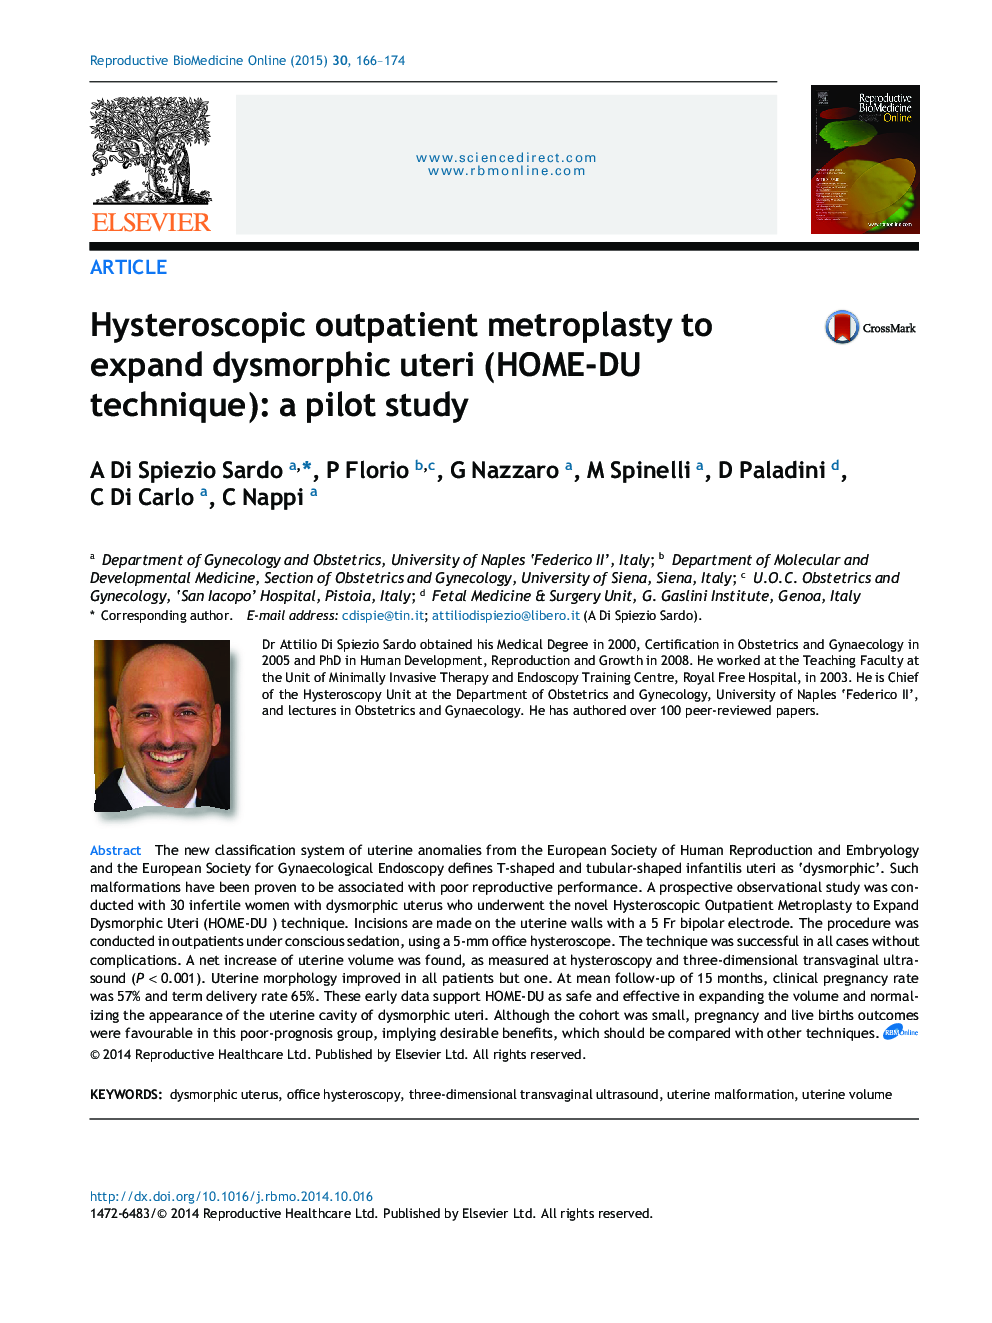 Hysteroscopic outpatient metroplasty to expand dysmorphic uteri (HOME-DU technique): a pilot study